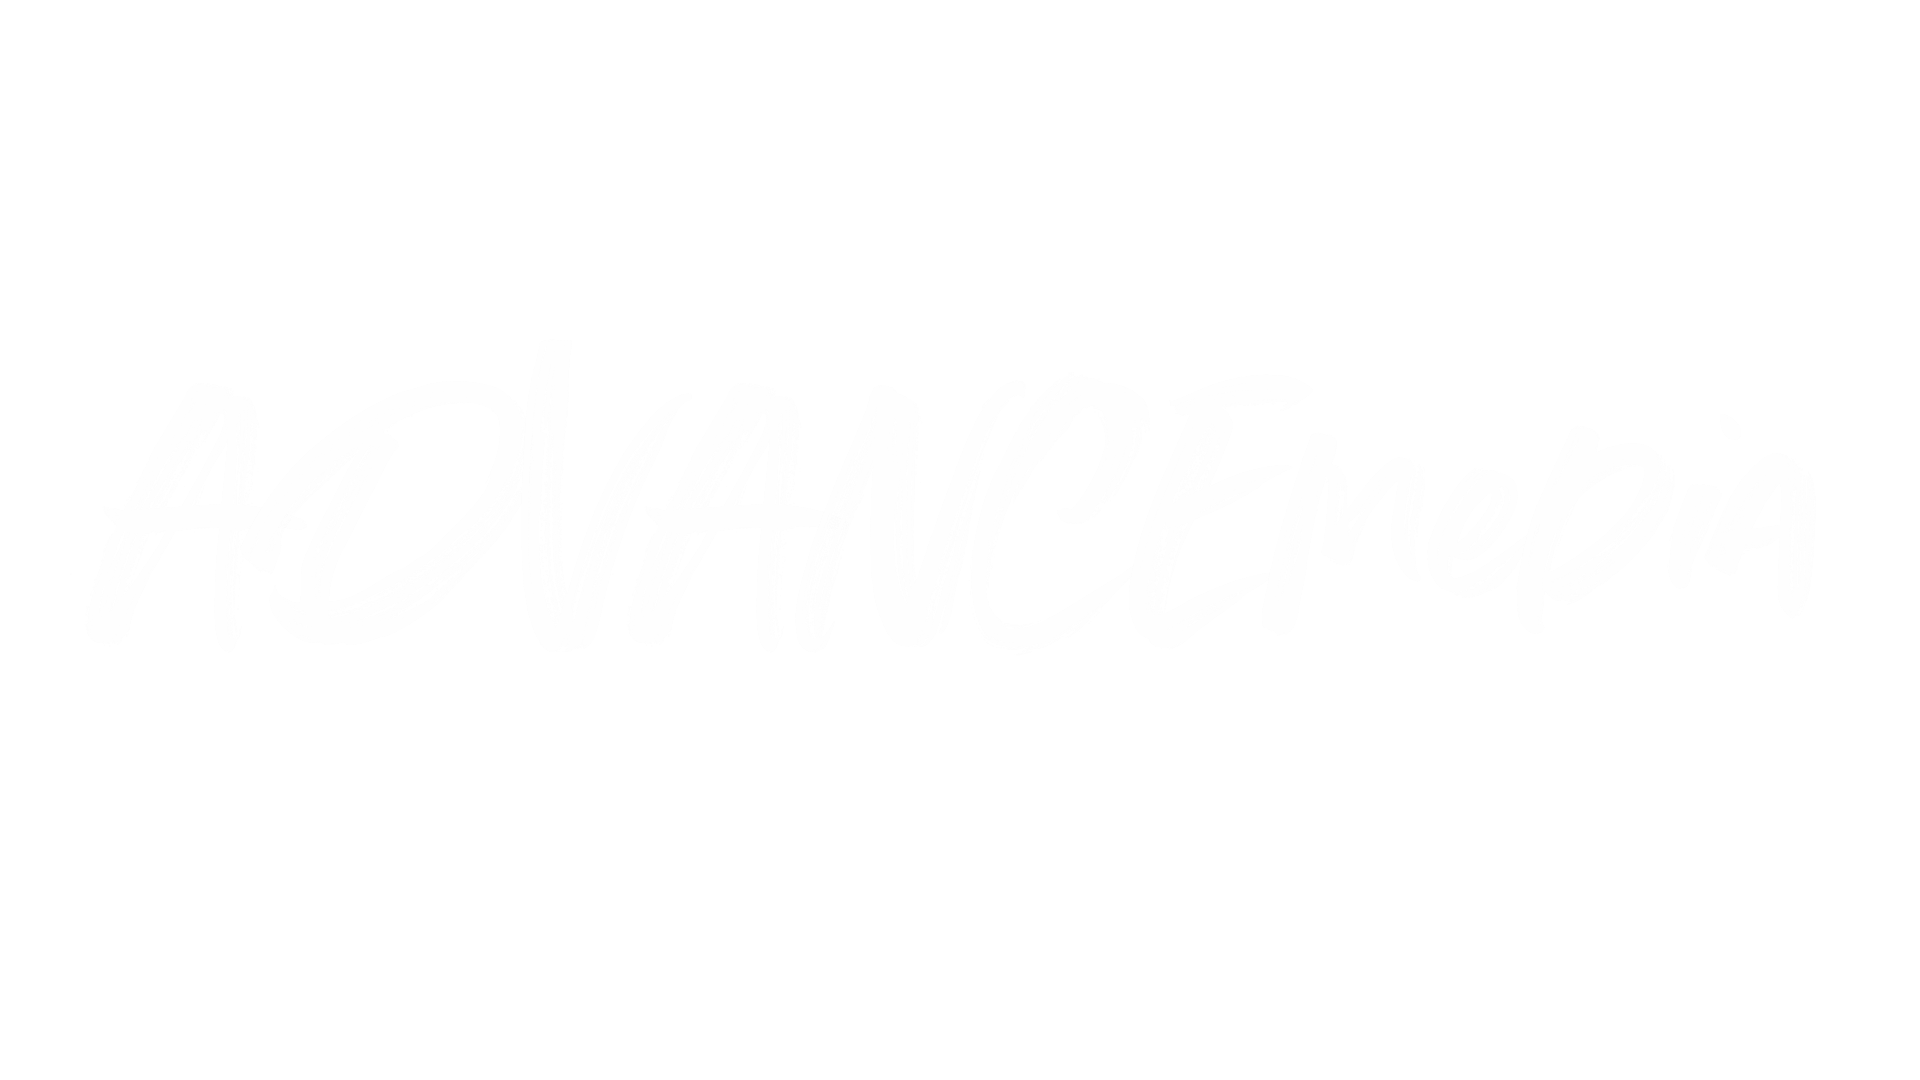 ADVANCEmedia logo